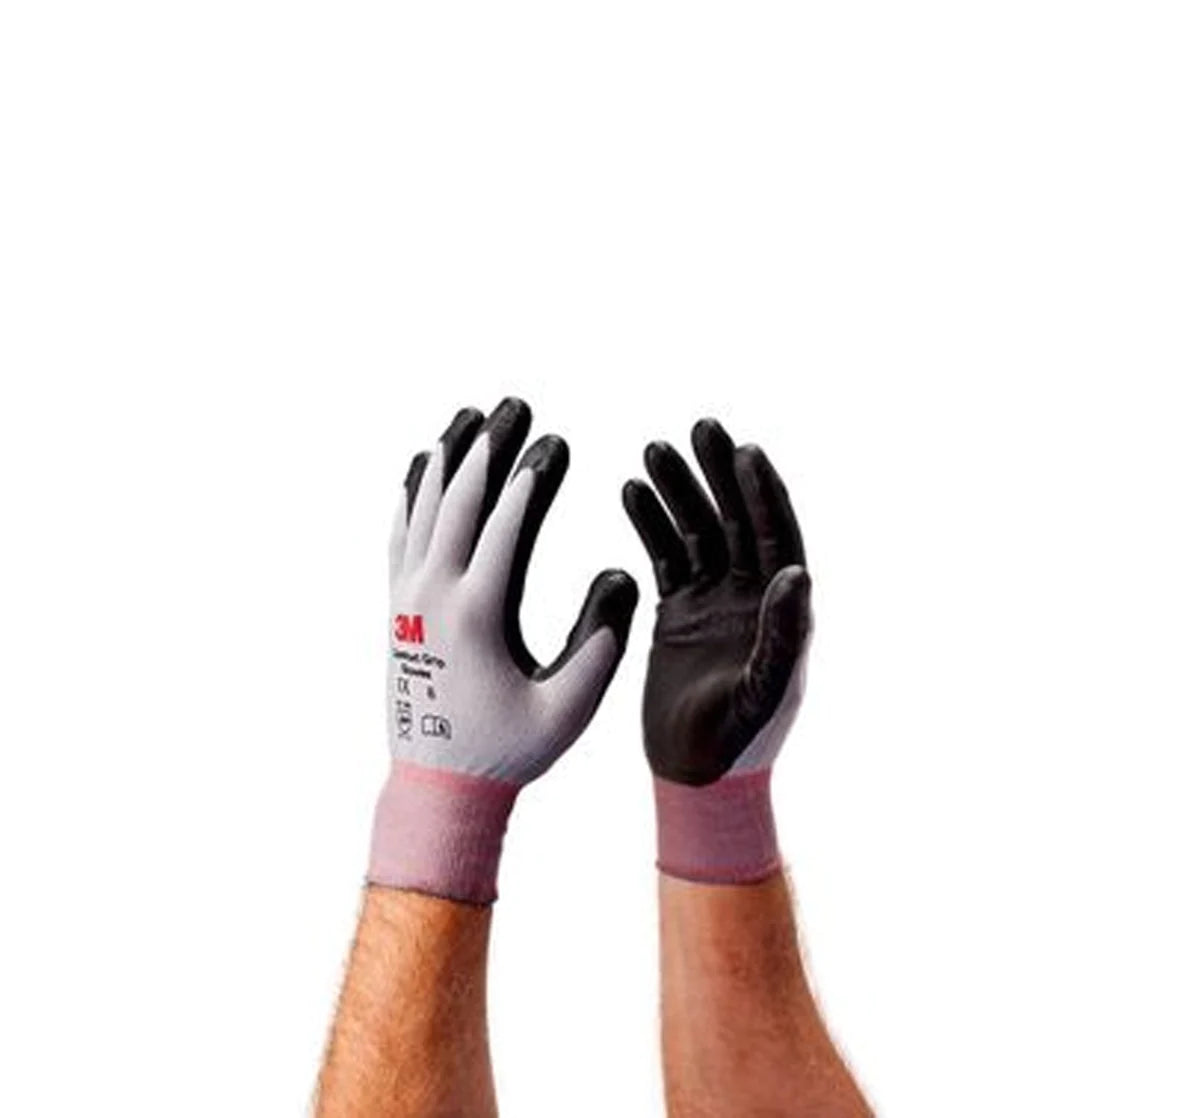 3M Comfort Grip Glove, General Use, Size XL